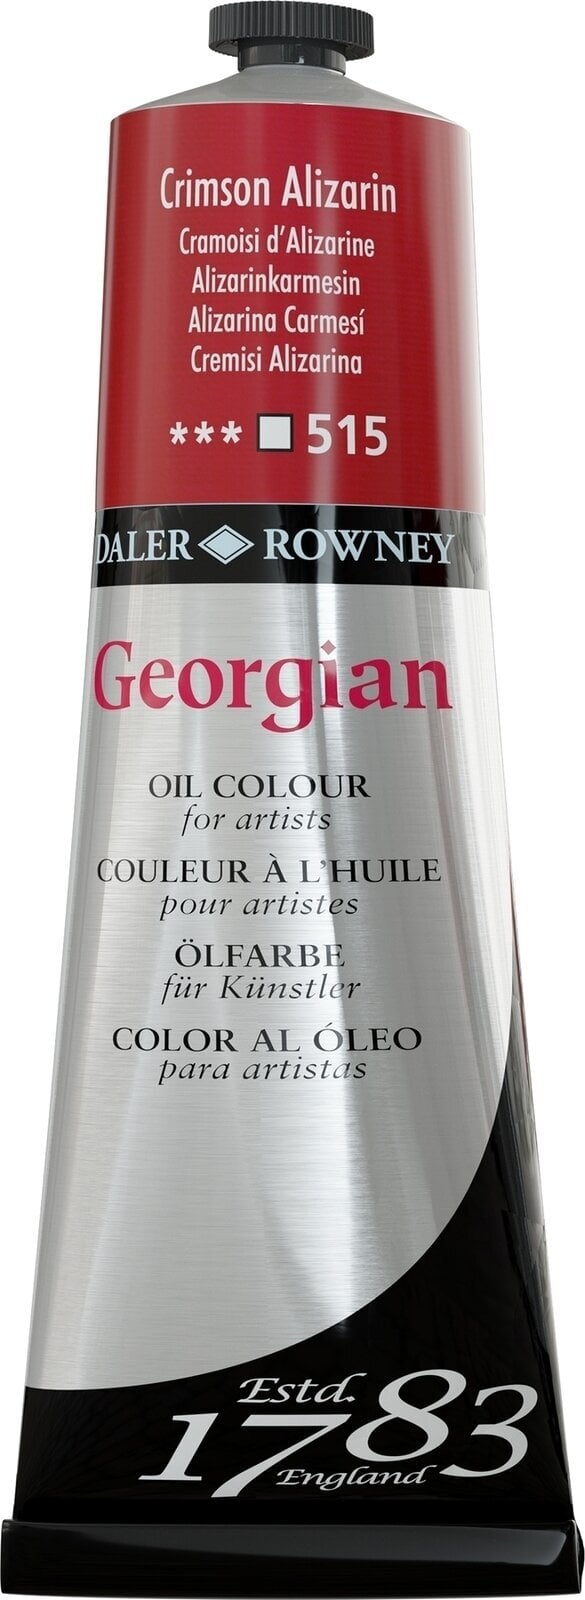 Oil colour Daler Rowney Georgian Oil Paint Crimson Alizarin 225 ml 1 pc